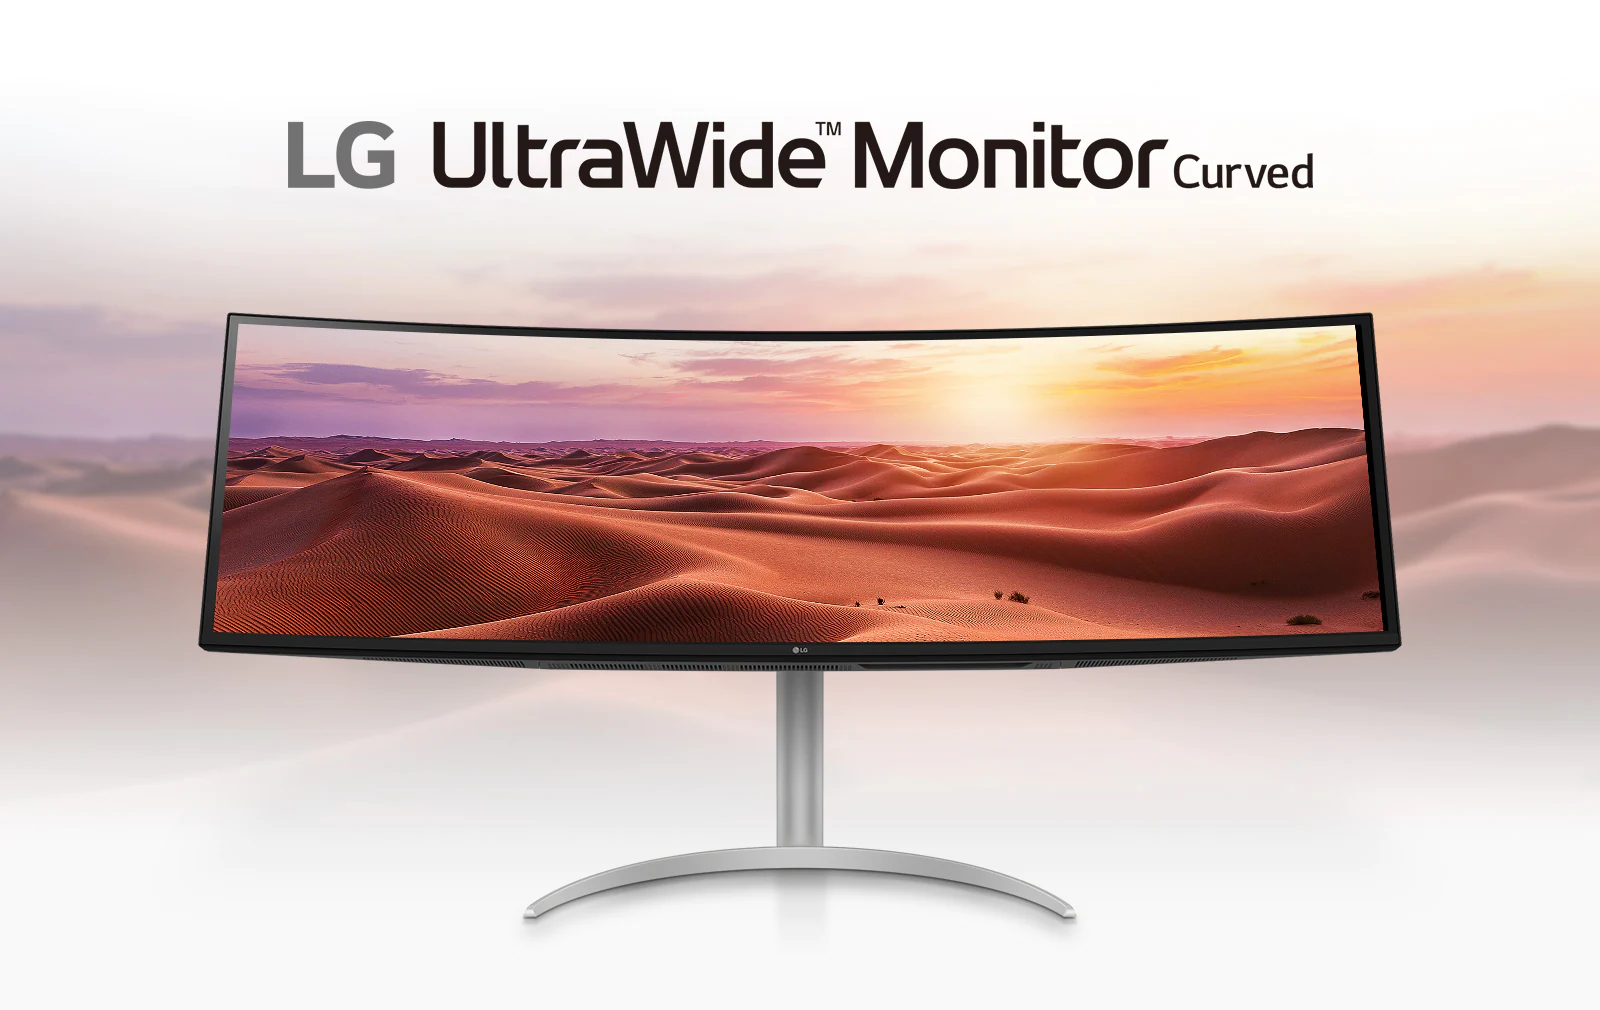 mnt-ultrawide-49wq95c-01-1-lg-ultrawide-monitor-curved-desktop